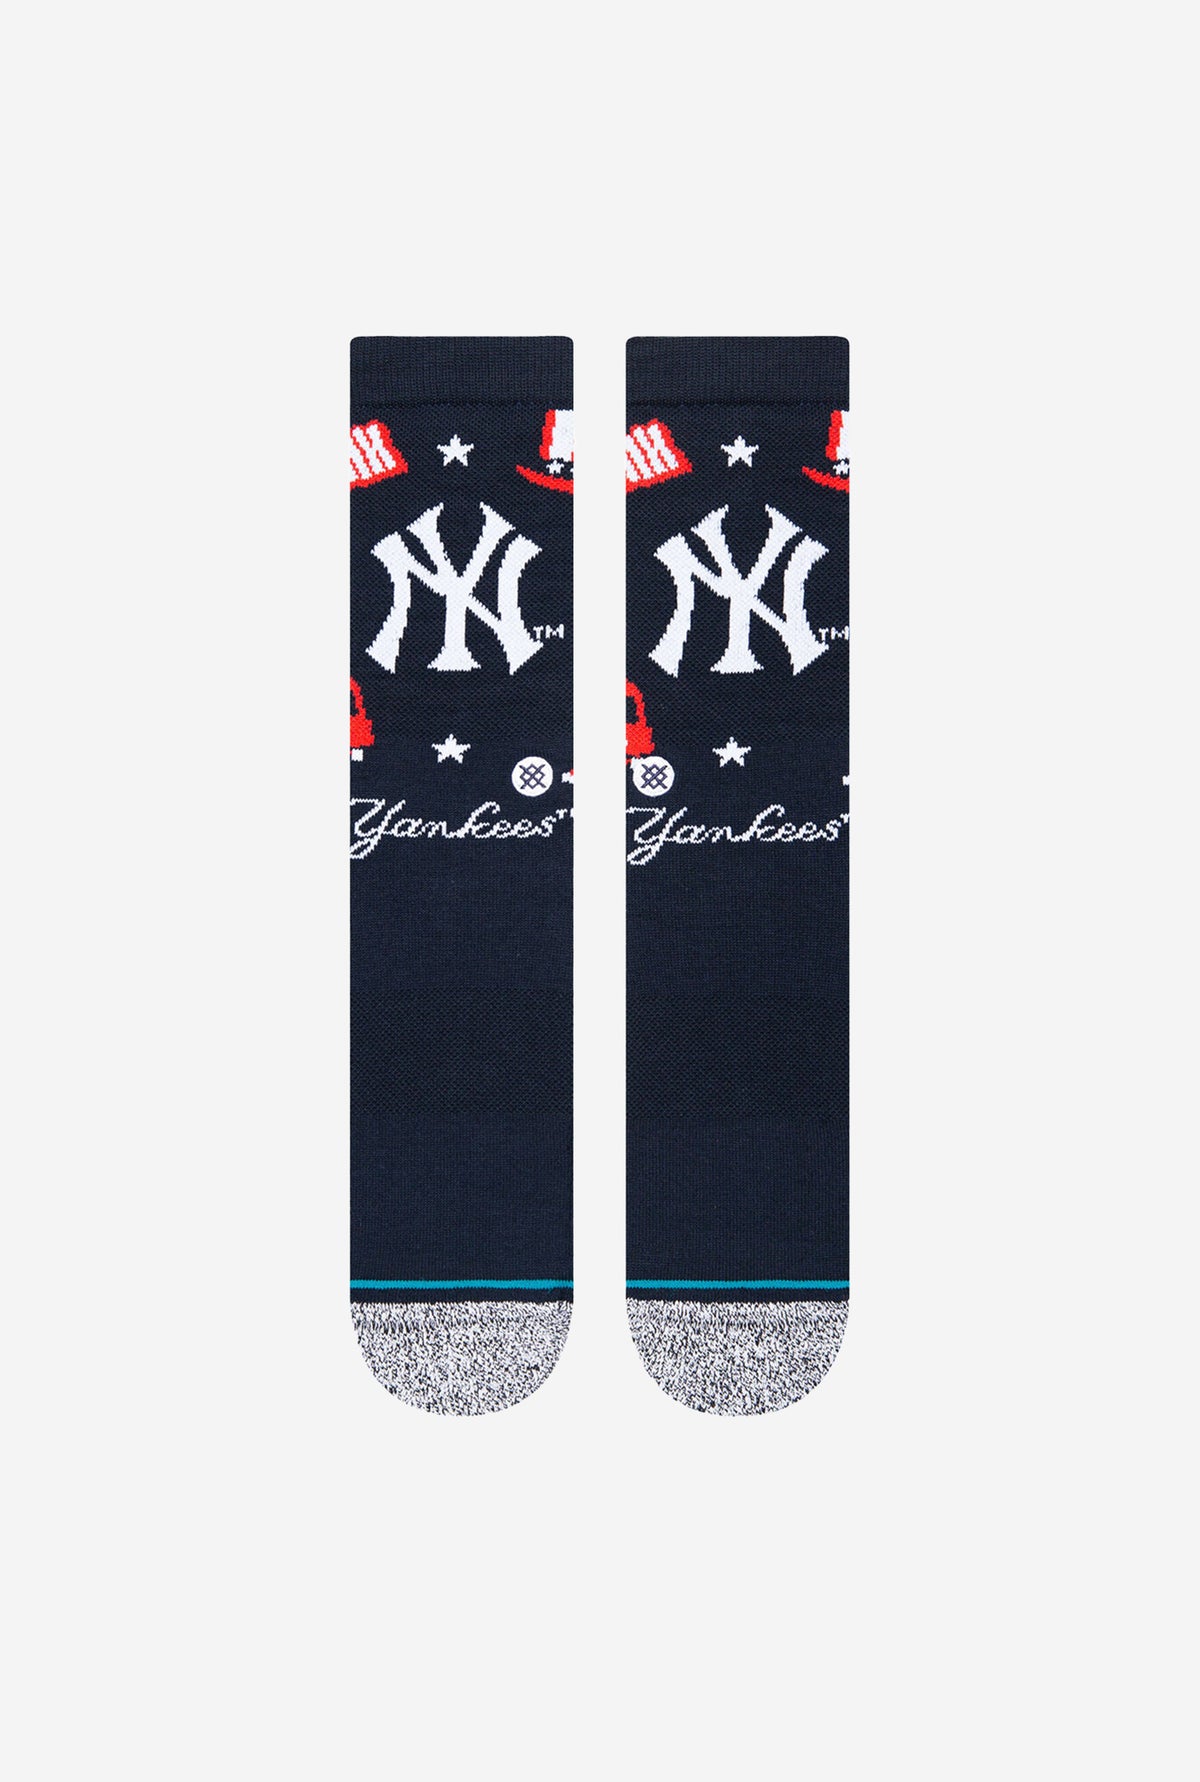 New York Yankees Landmark Socks - Navy